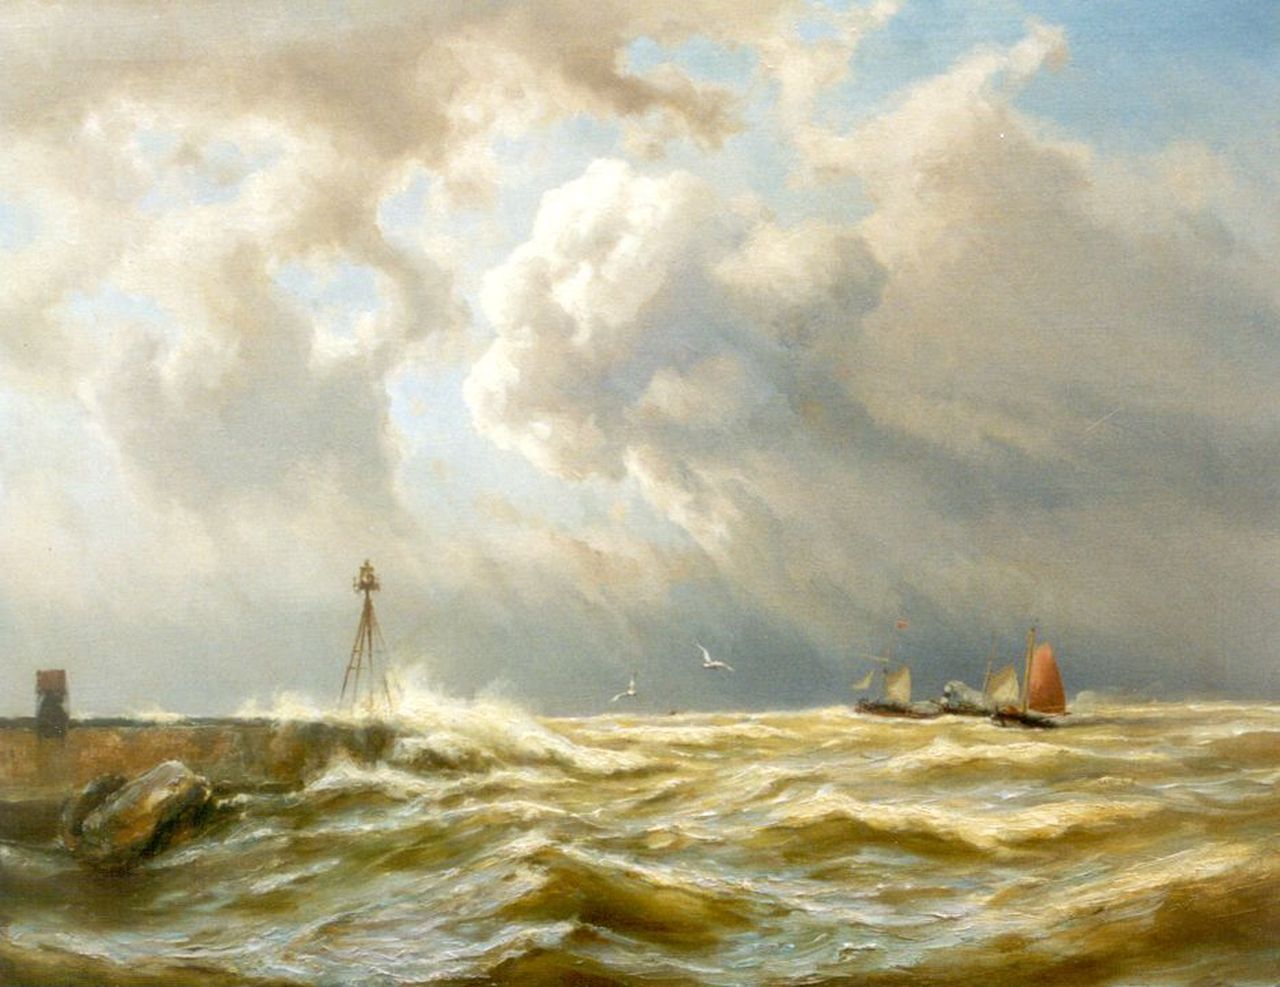 Koekkoek J.H.B.  | Johannes Hermanus Barend 'Jan H.B.' Koekkoek, Sailing vessels and a paddle-steamer on stormy seas near IJmuiden, Öl auf Leinwand 63,5 x 80,5 cm, signed l.l.